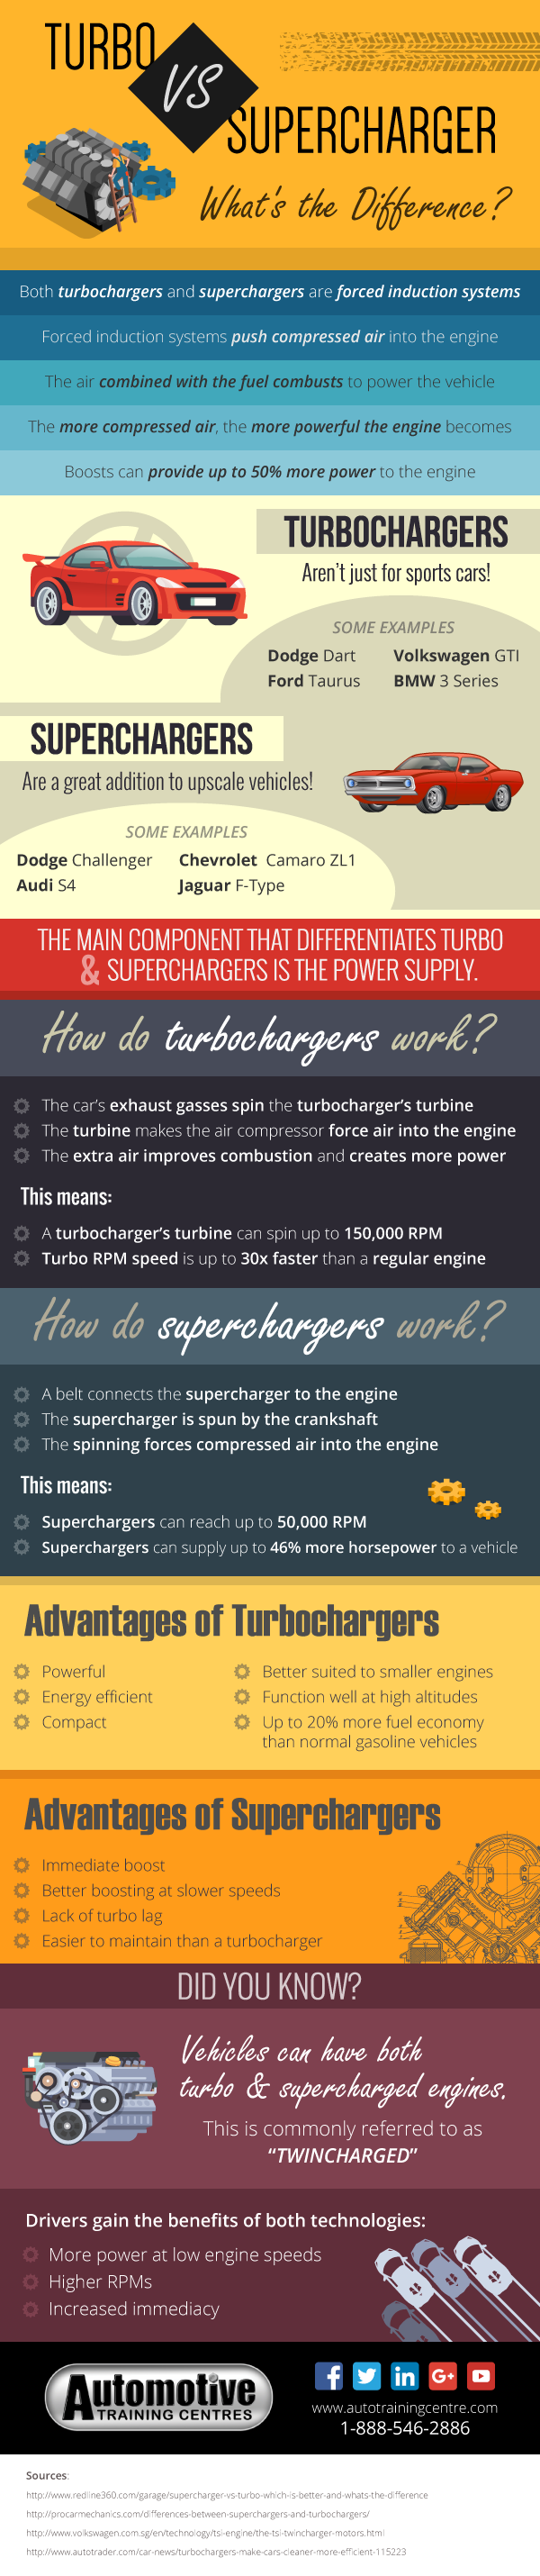 ATC Surrey_turbo vs supercharger